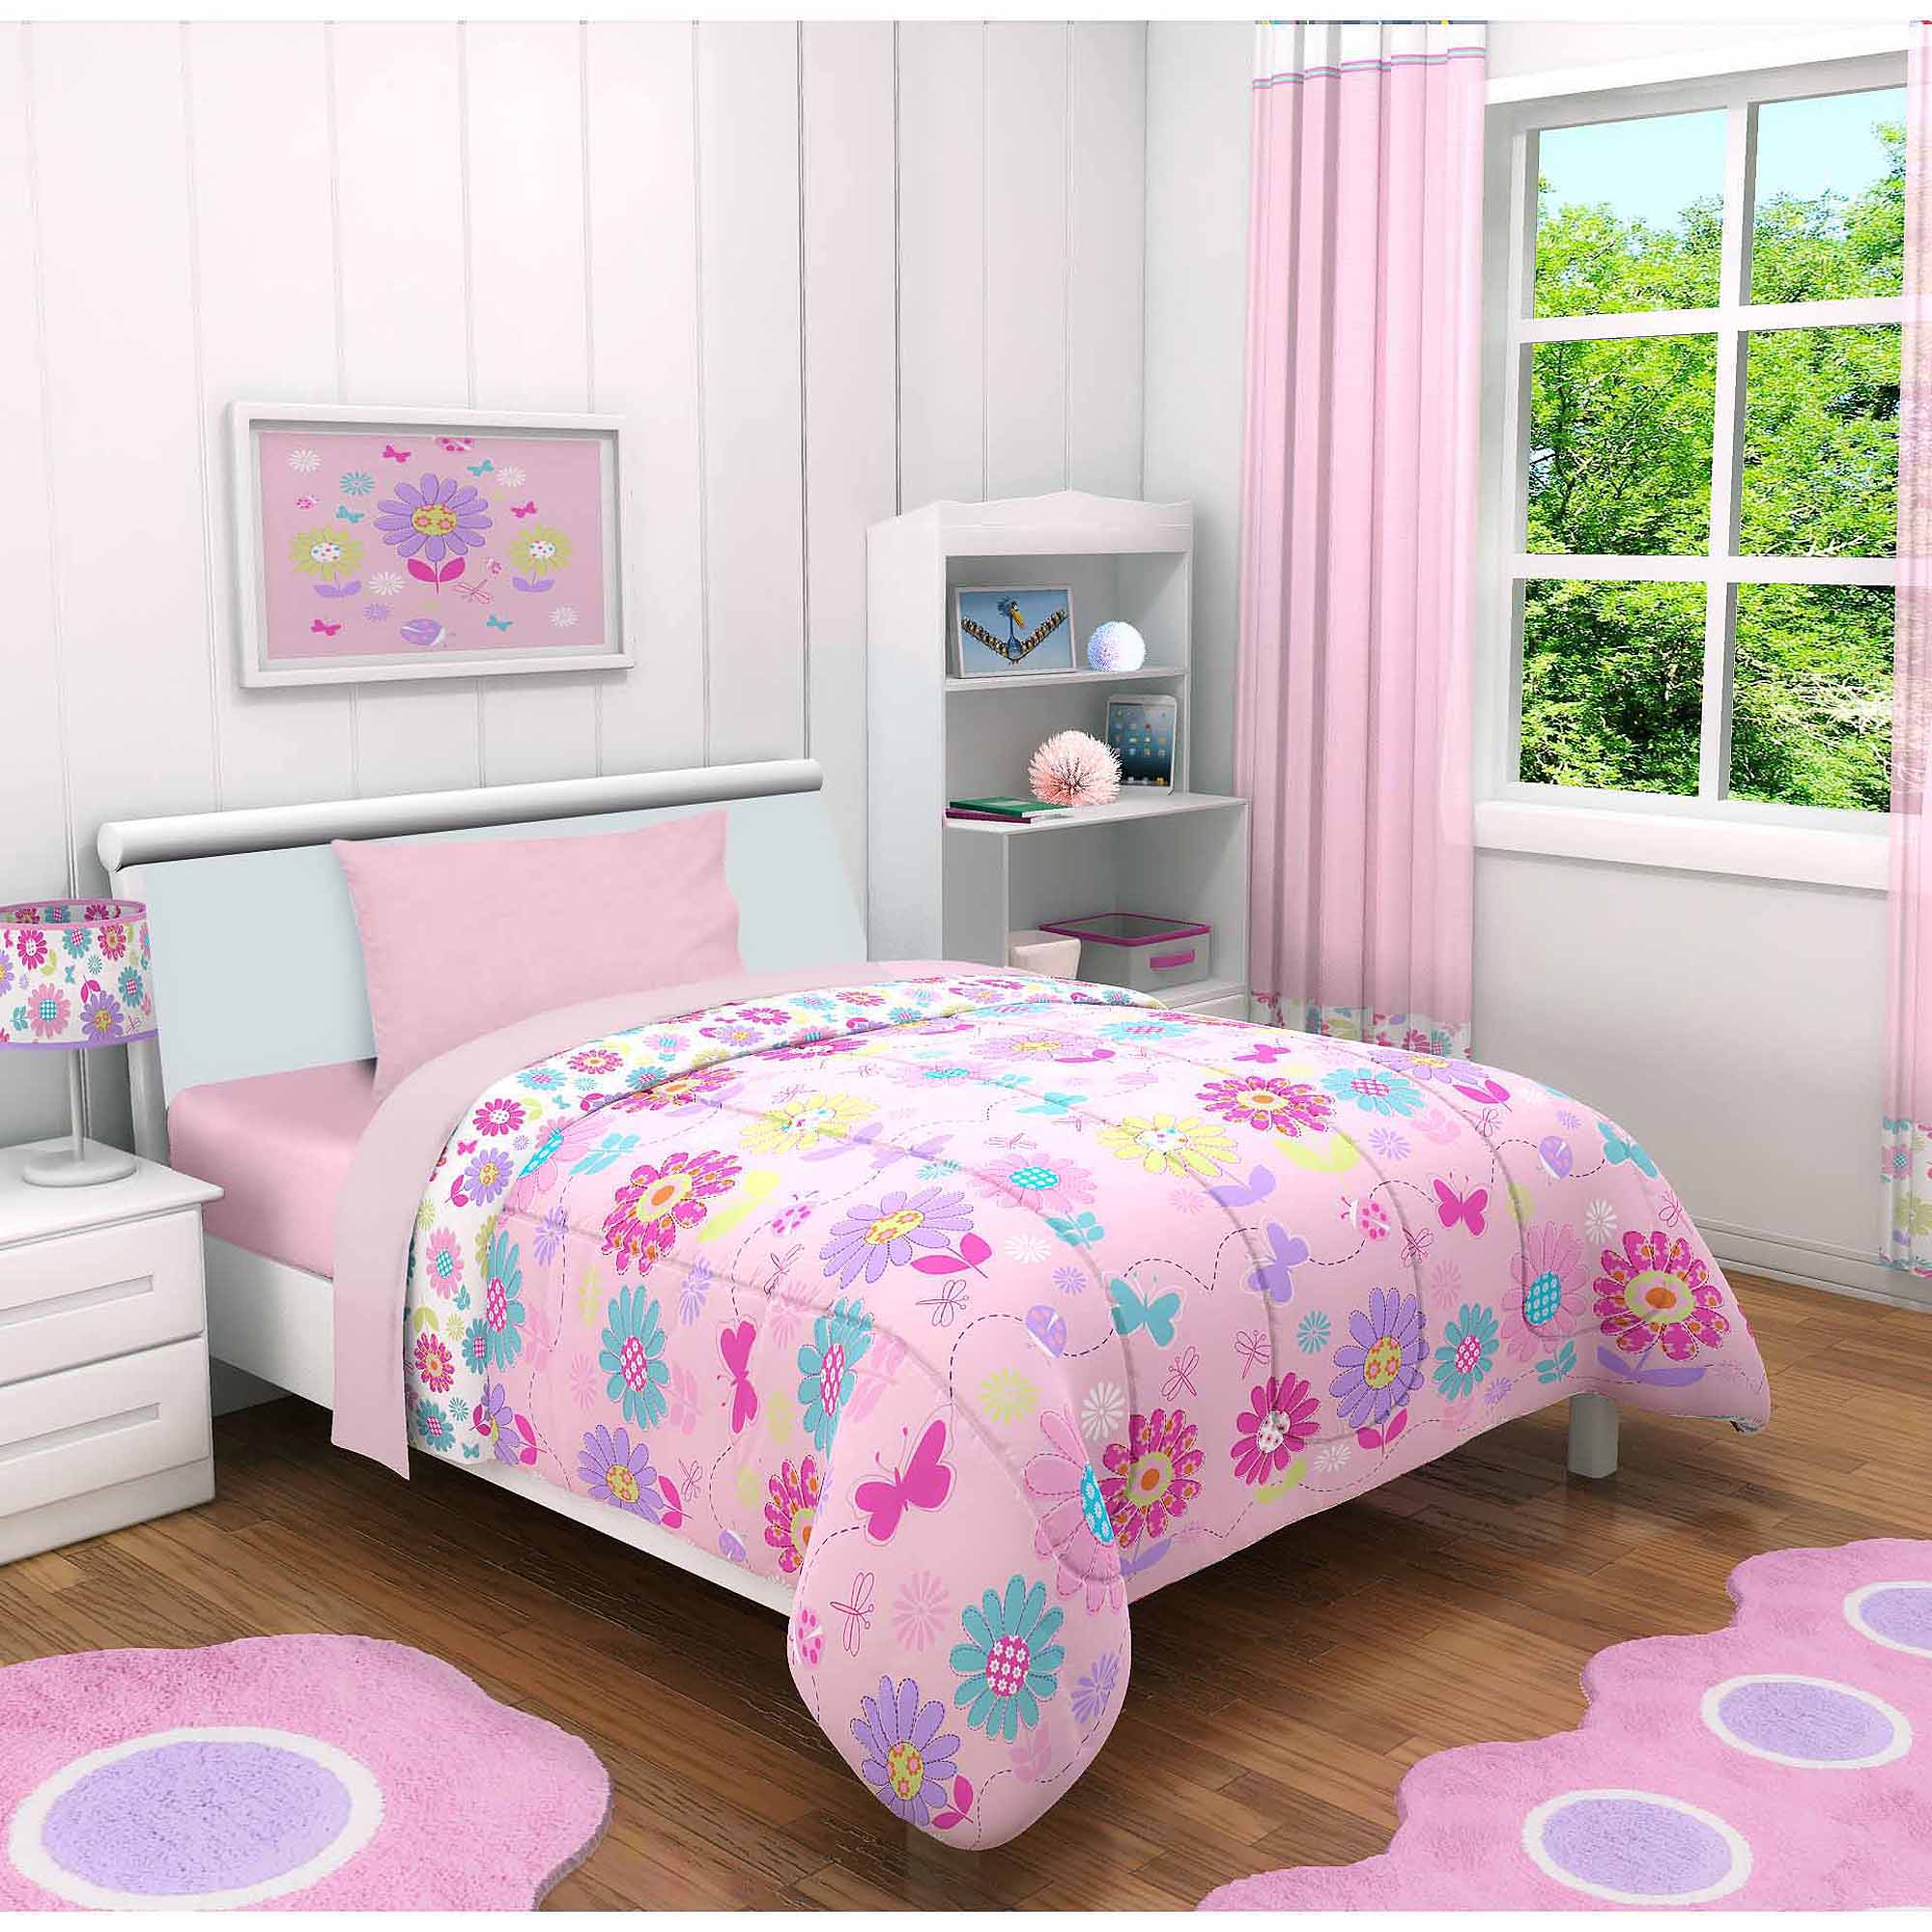 Idea Nuova Daisy Flowers 3-Piece Toddler Bedding Set with BONUS Matching Pillow Case - image 1 of 5